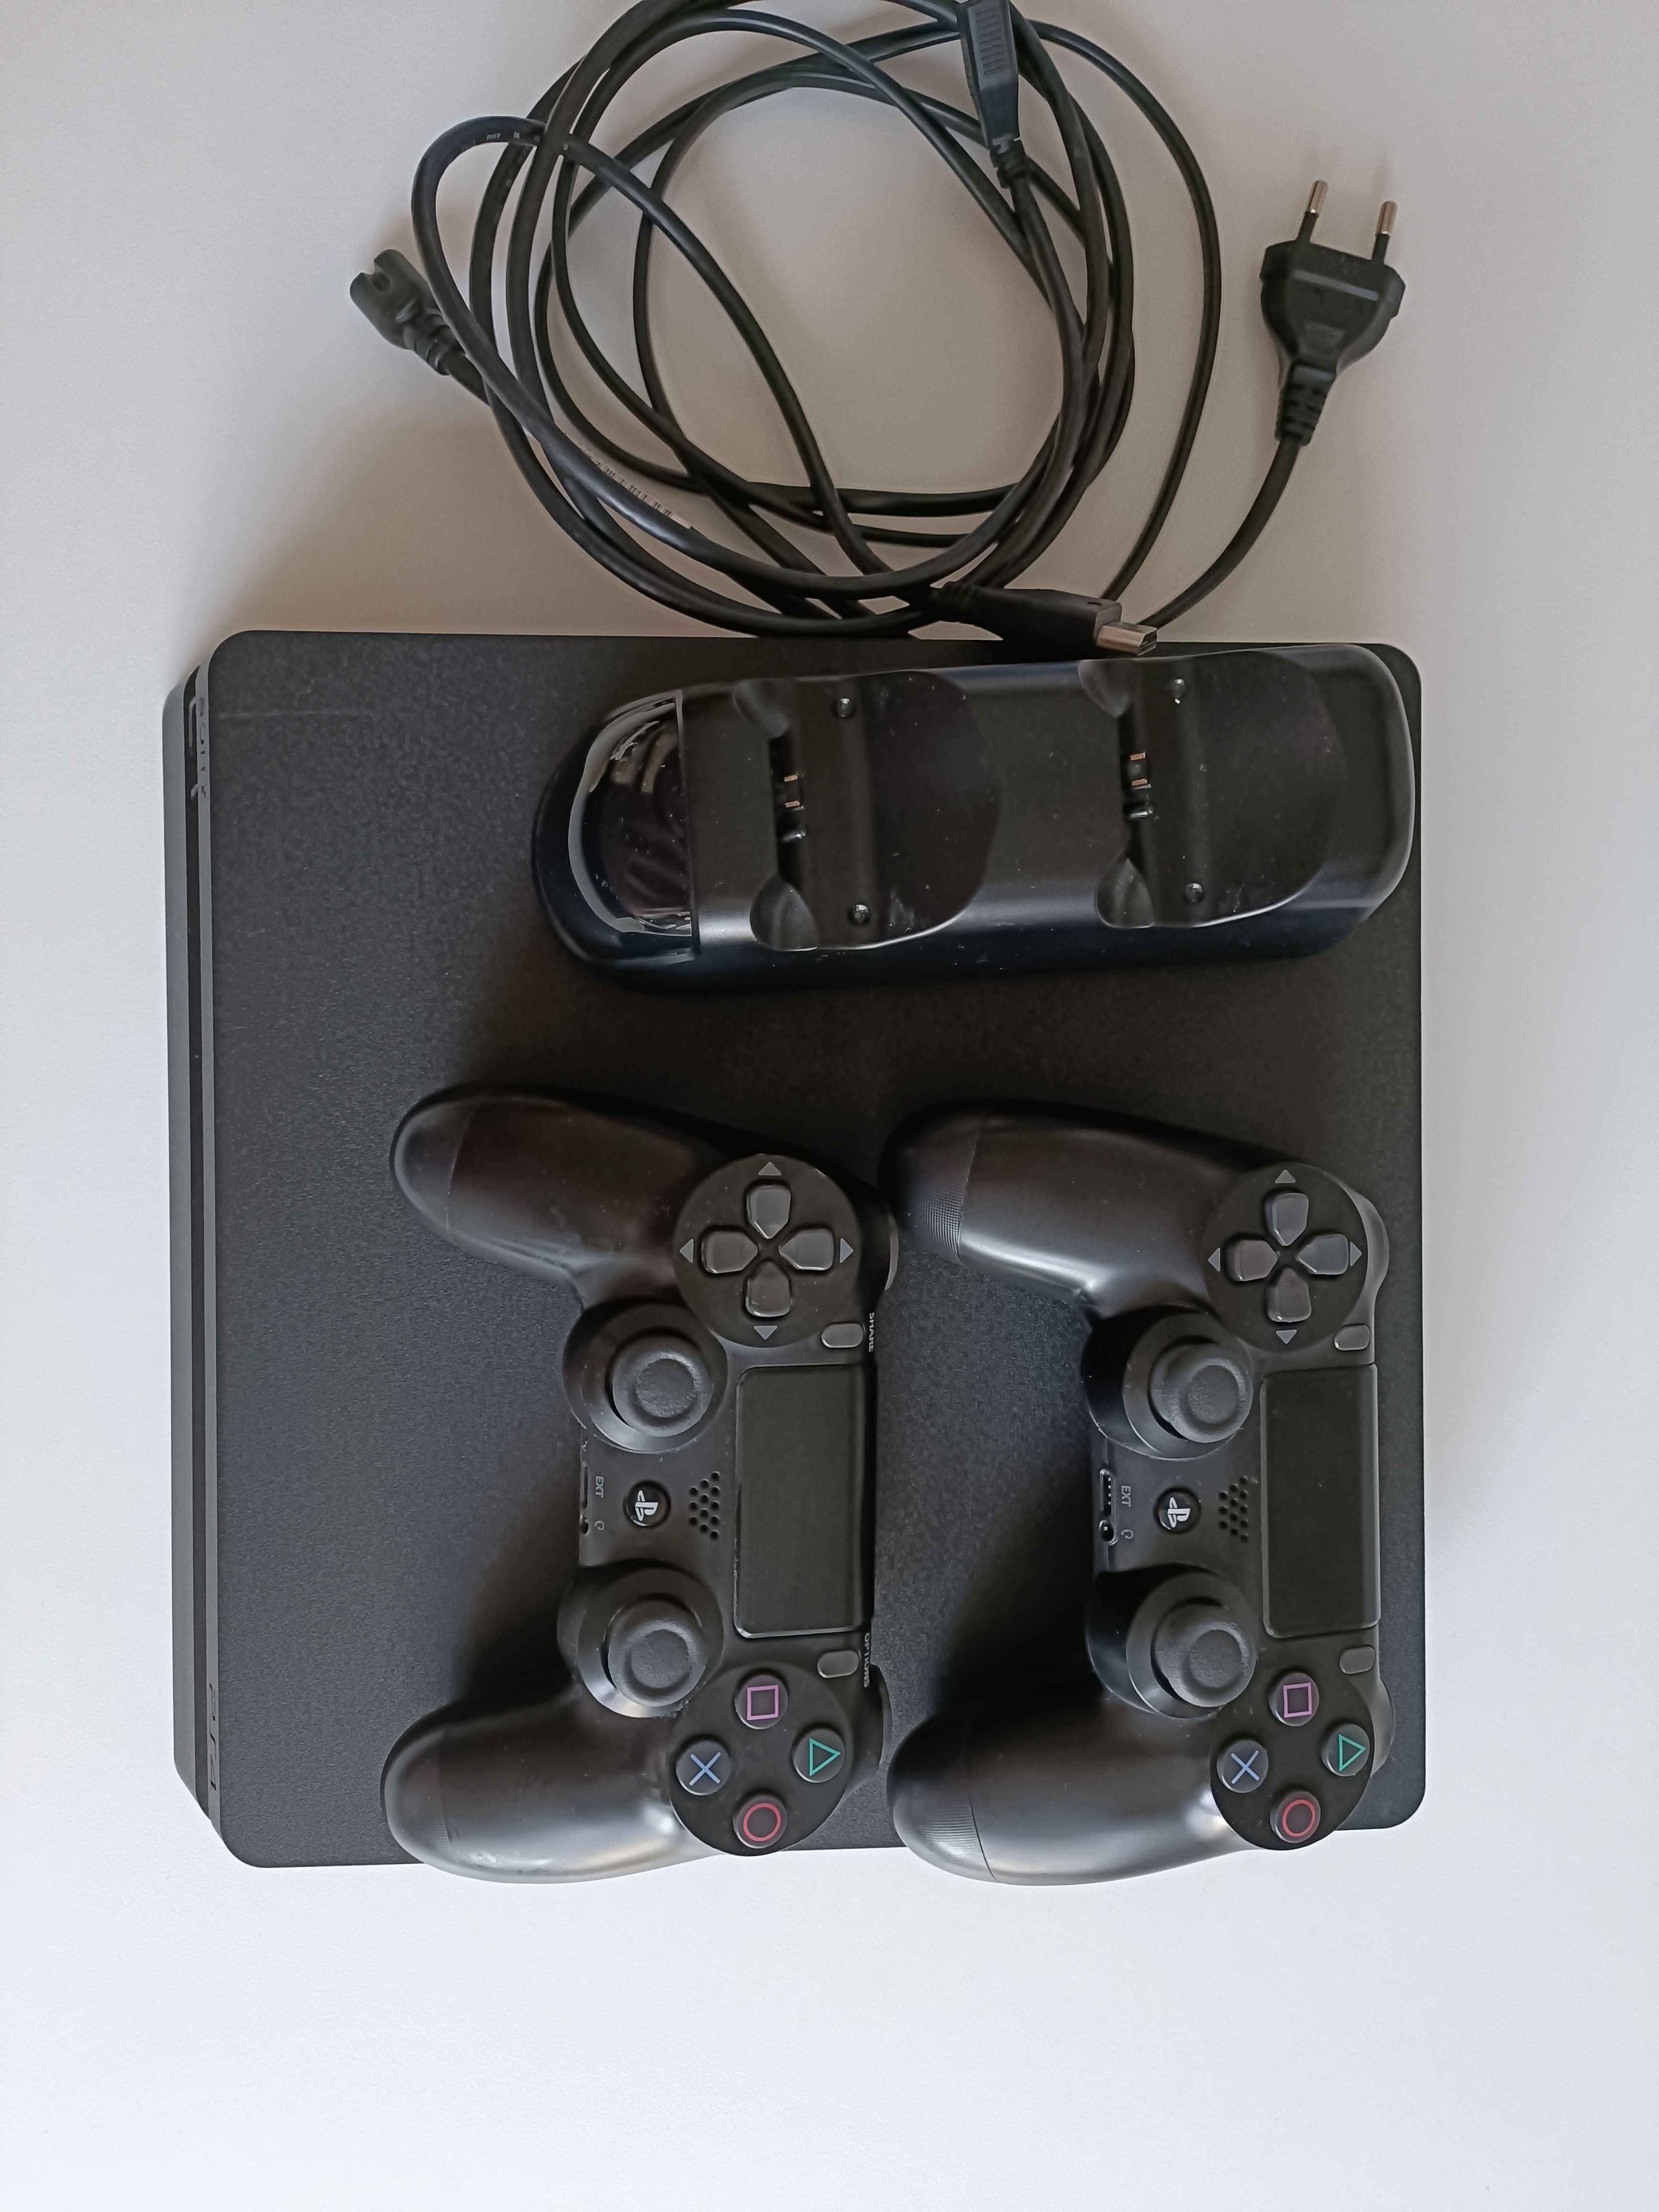 Consola Sony Playstation 4 Slim (PS4) + 2 controller-e + incarcator